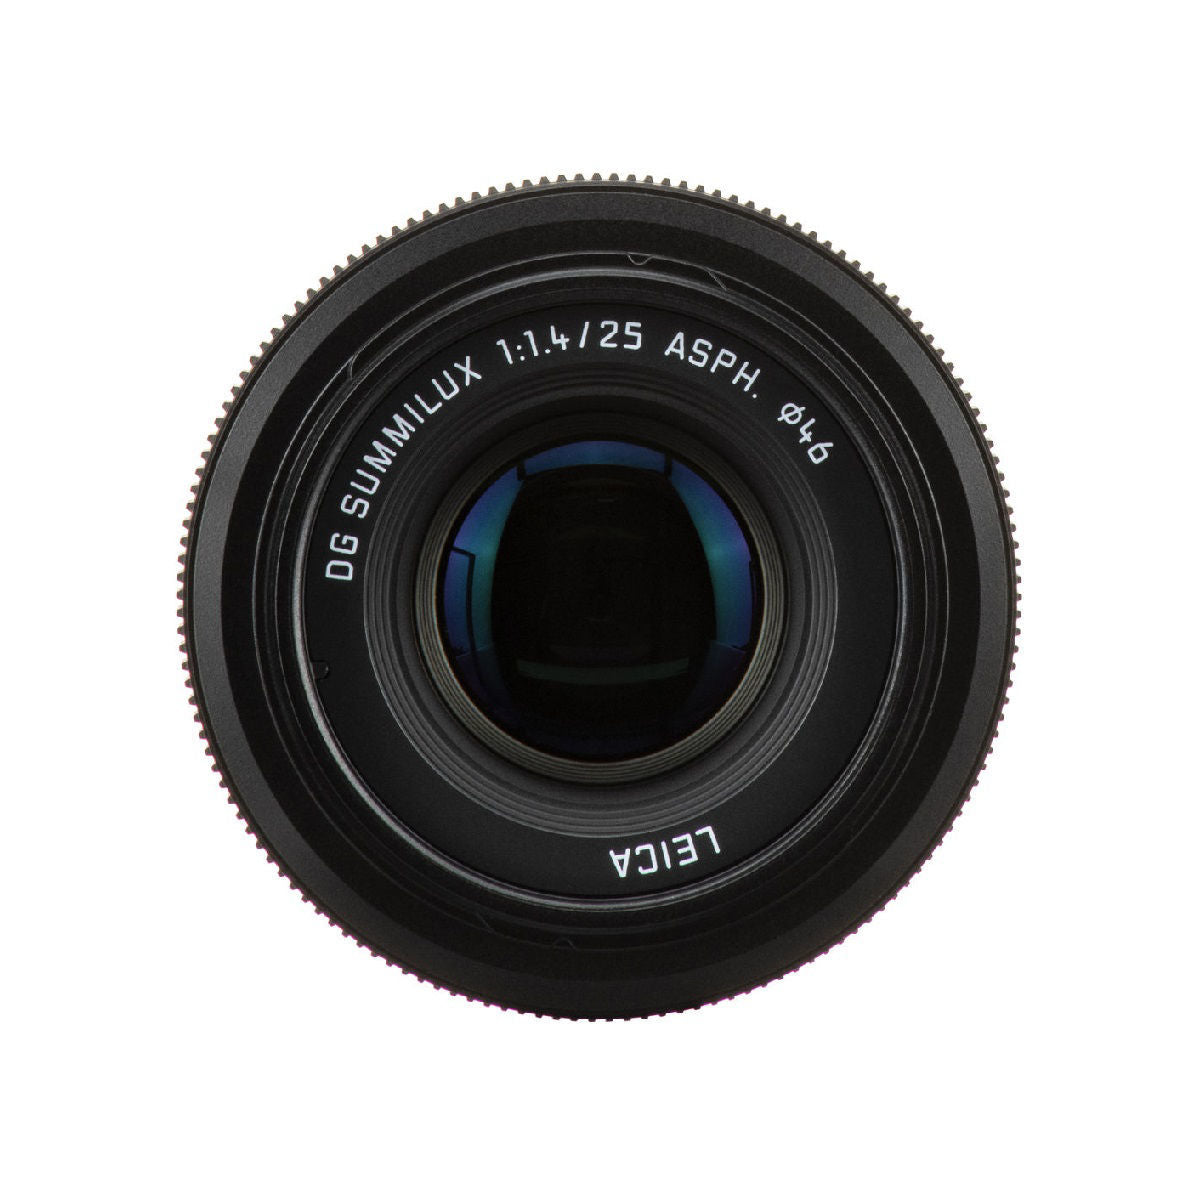 Panasonic Leica DG Summilux 25mm f 1.4 II Asph Lens